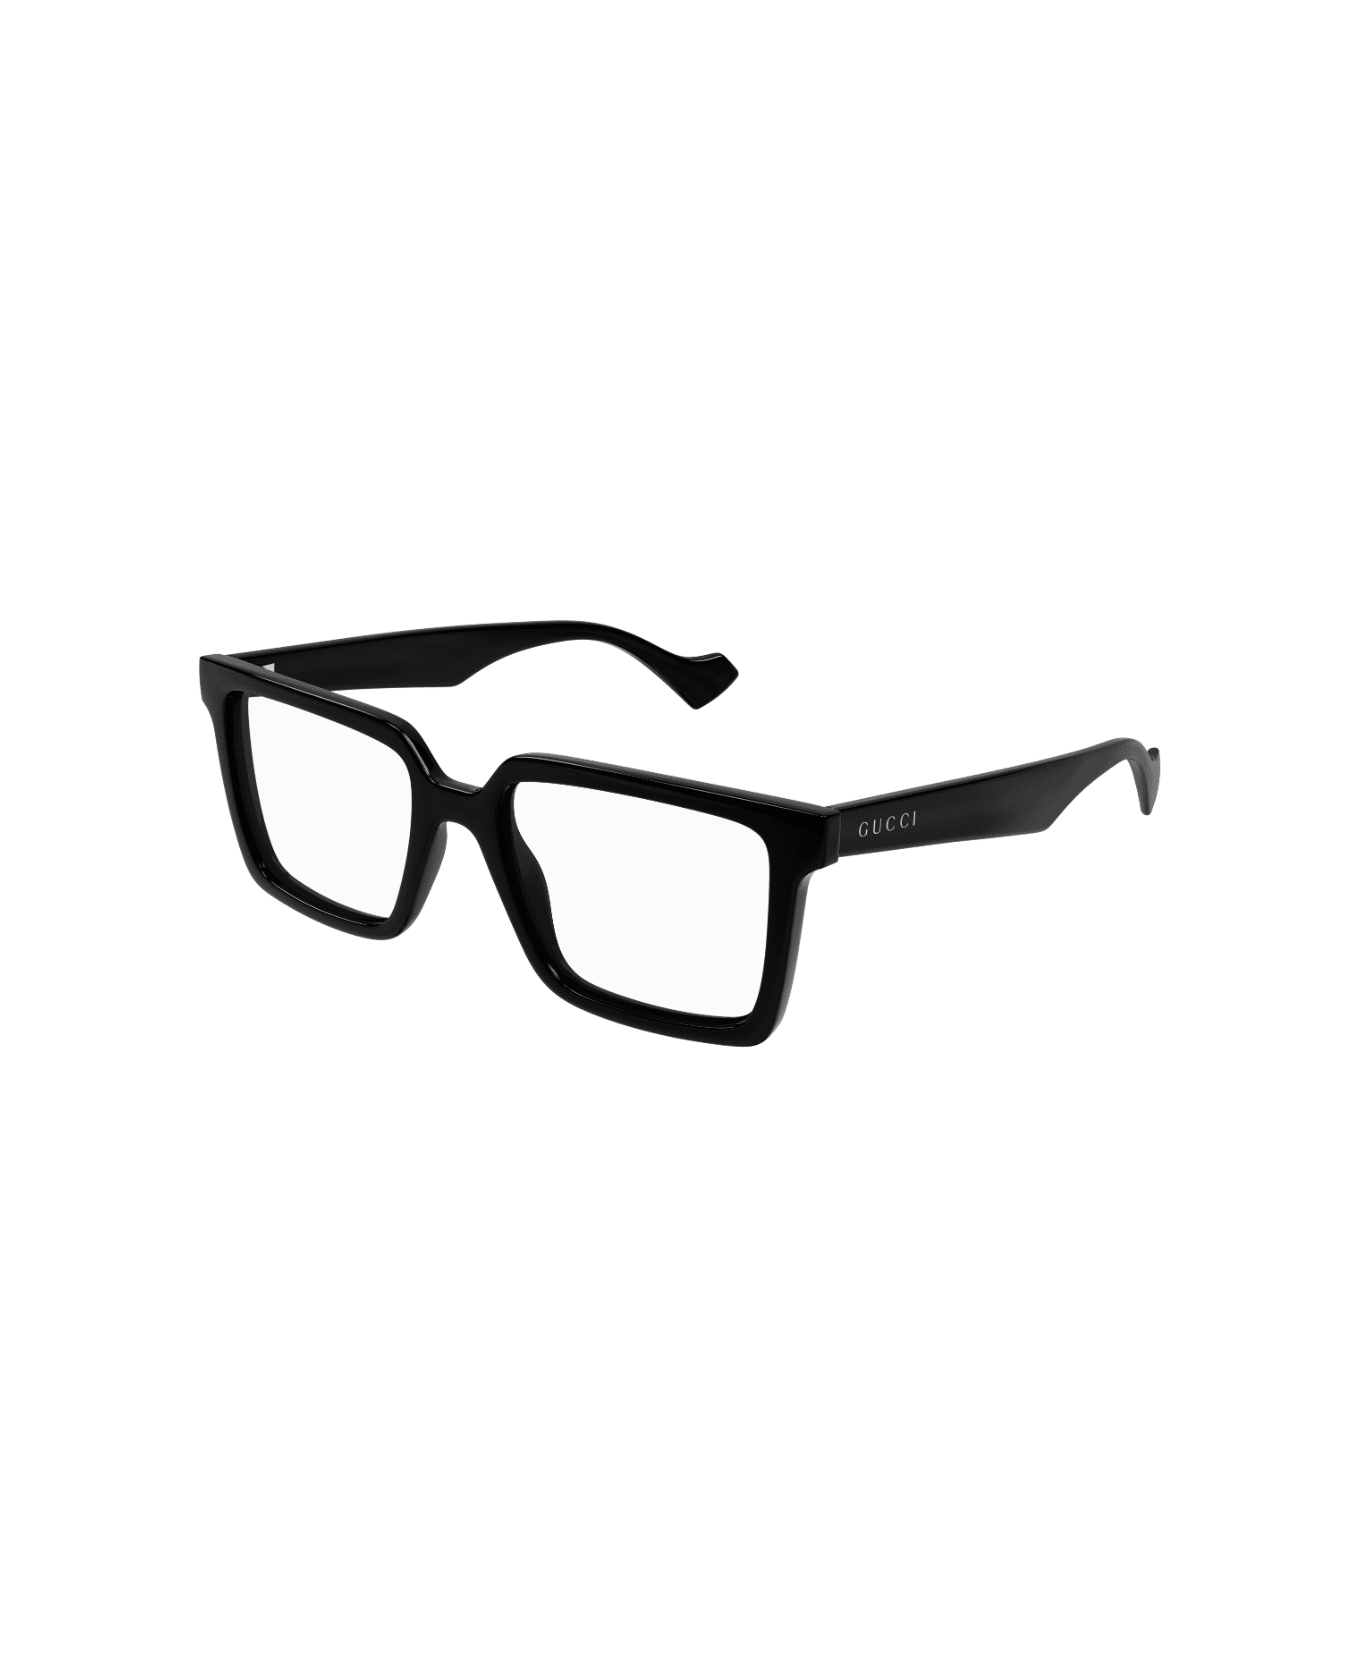 Gucci Eyewear GG1540-001 Glasses - Nero